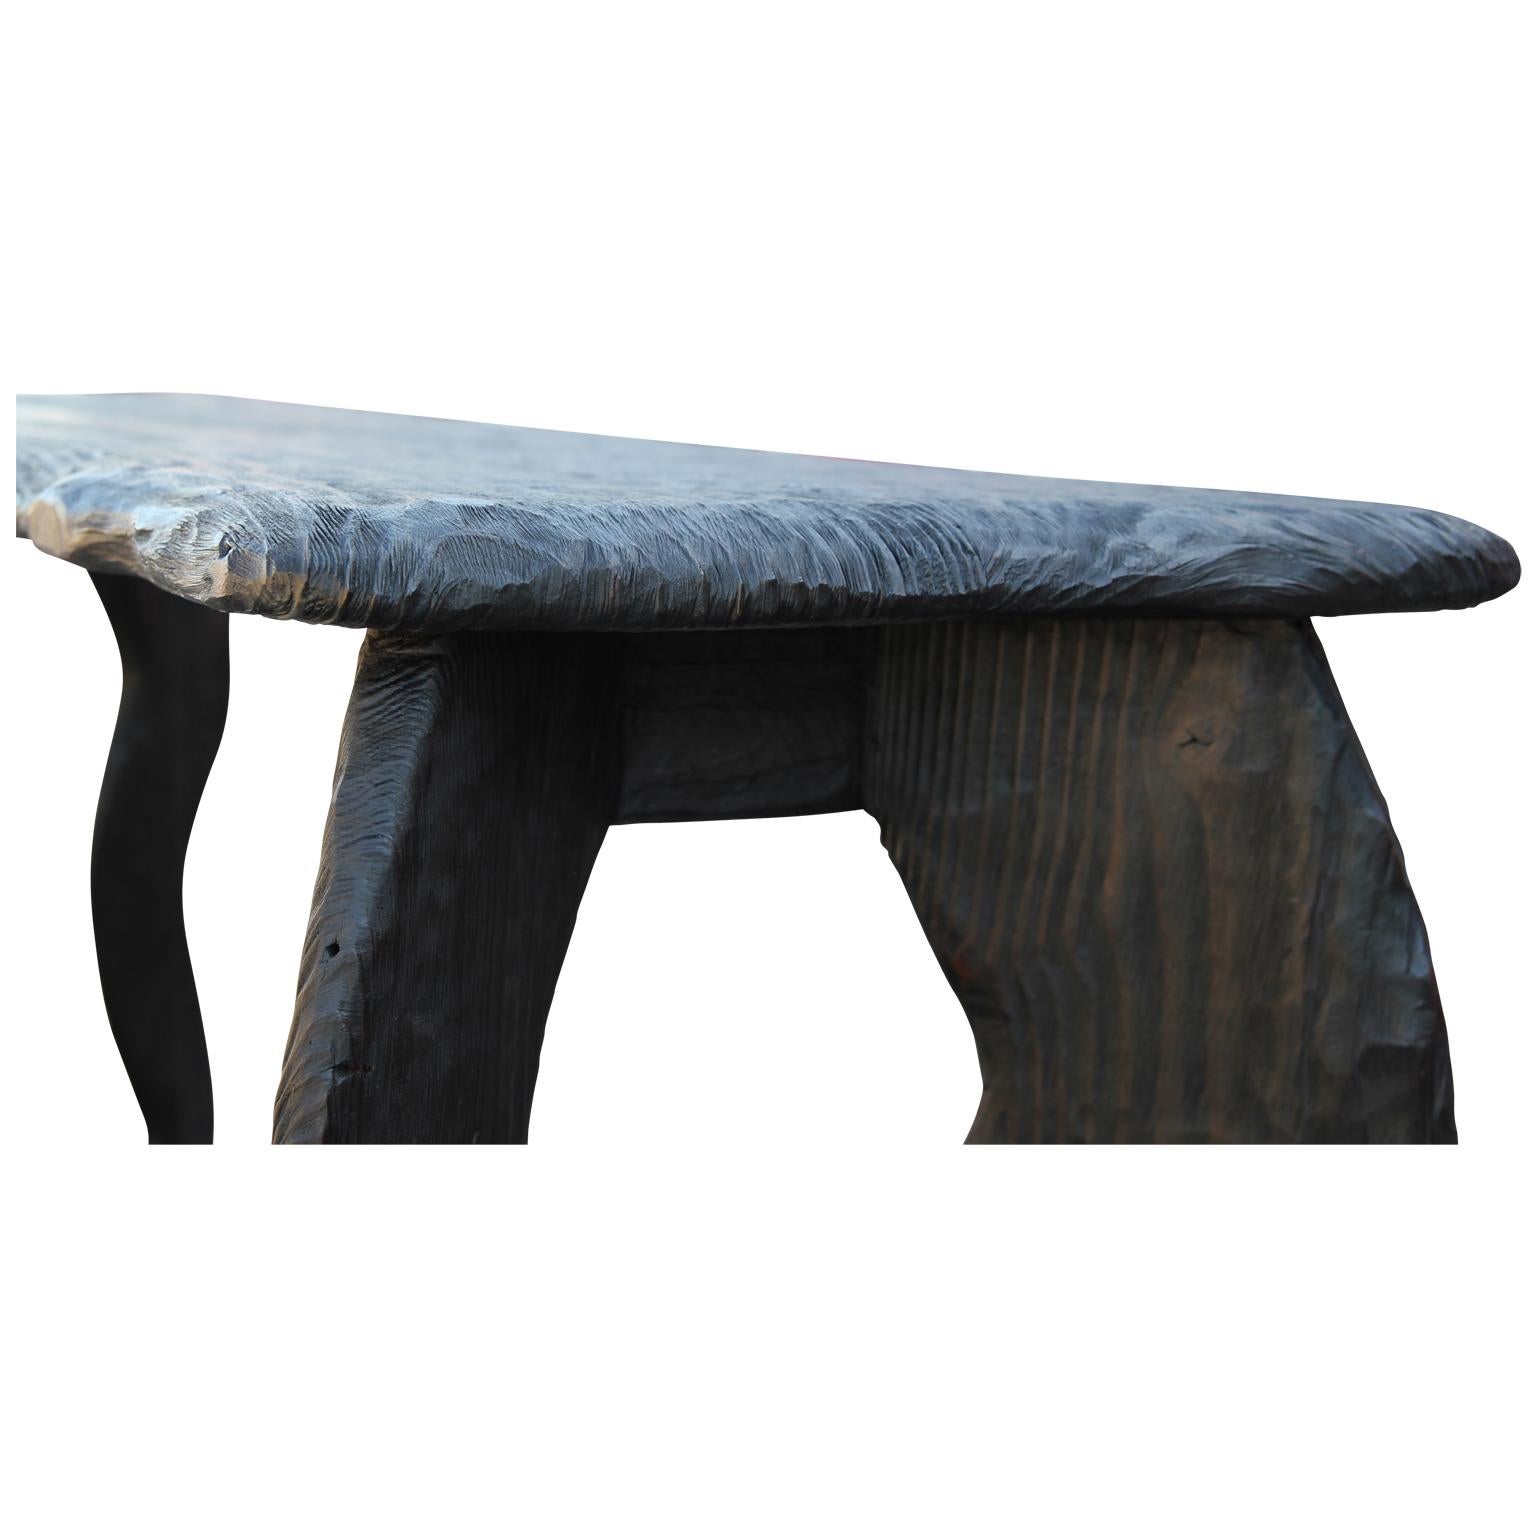 American Organic Modern Sculptural Loblolly Black Pine Console Table Heavy Texture